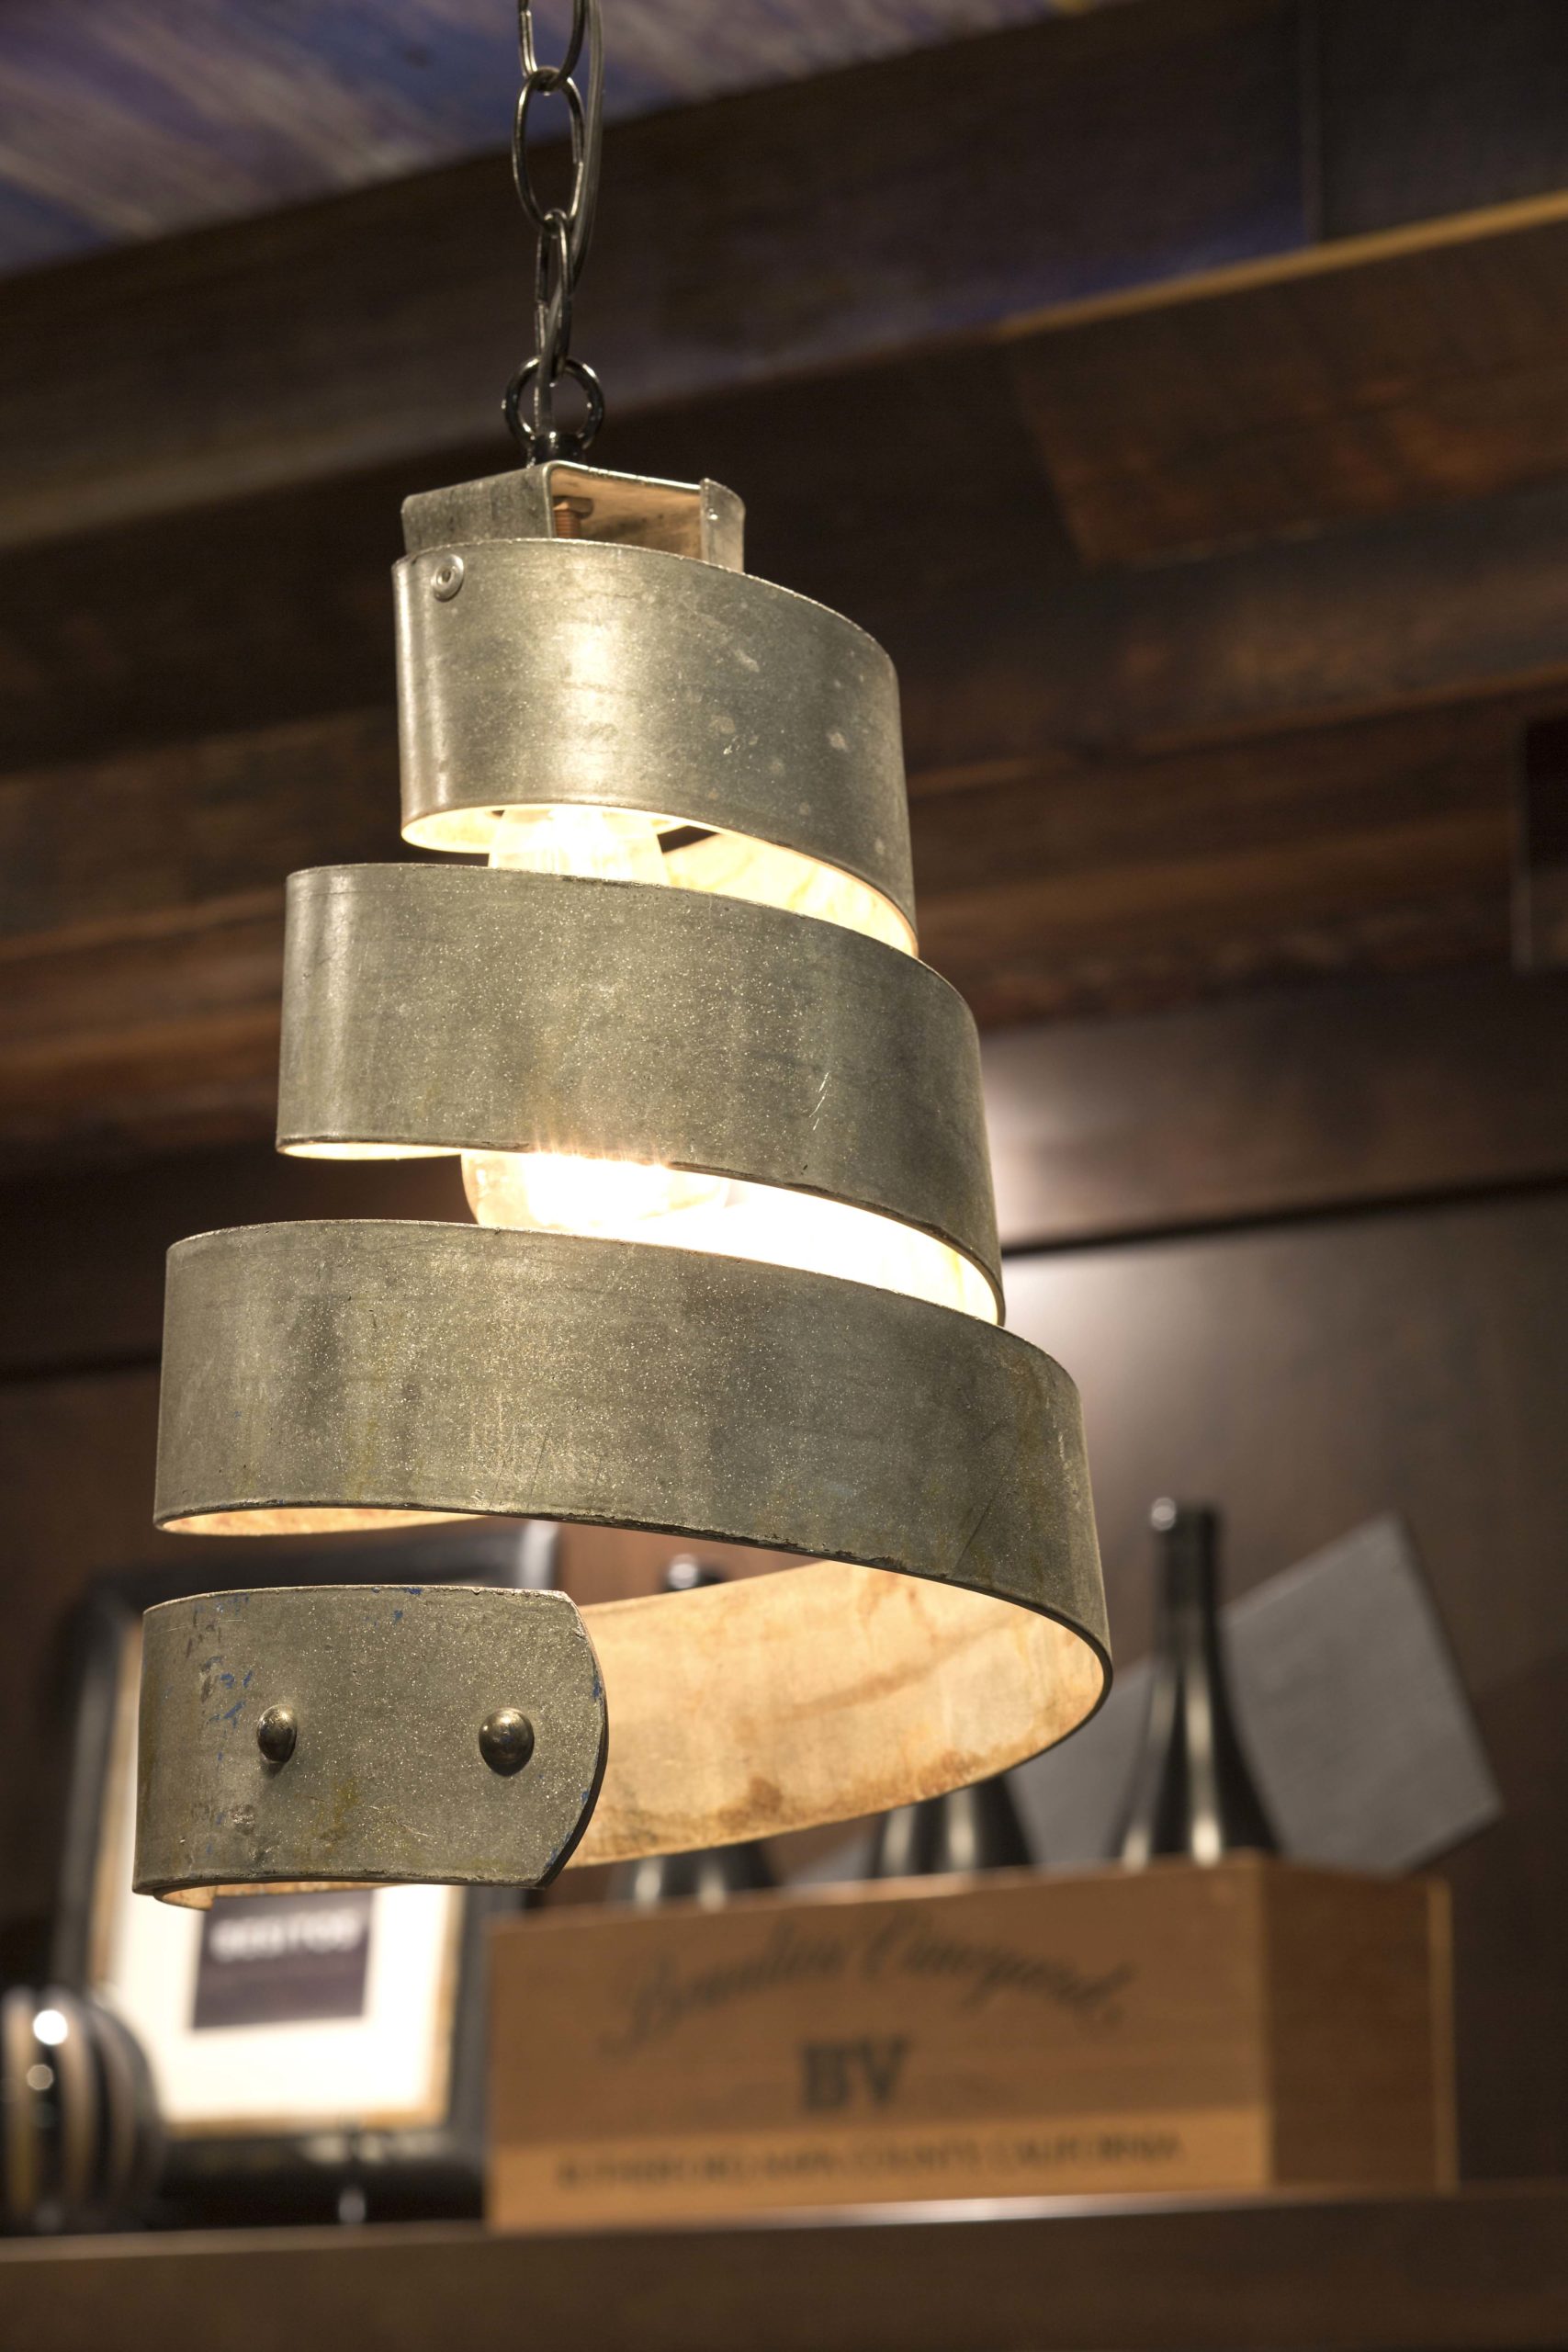 An Edina remodel wine barrel pendant light hanging in a room.